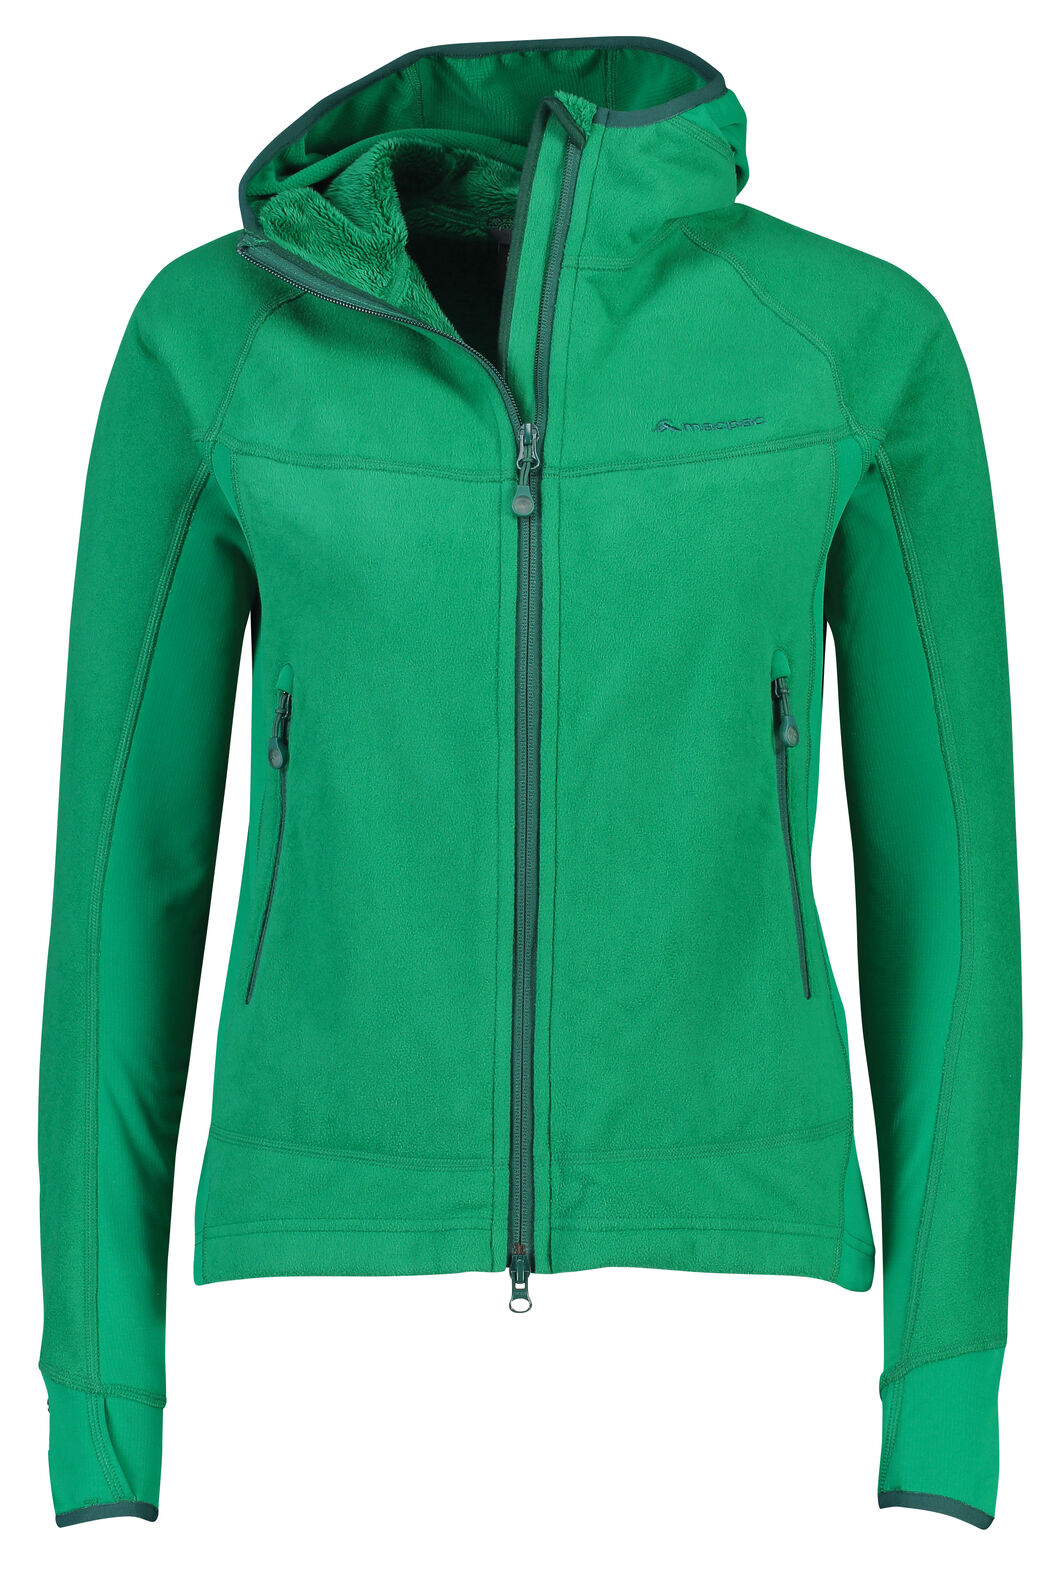 Macpac Mountain Hooded Pontetorto® Fleece Jacket - Women's | Macpac